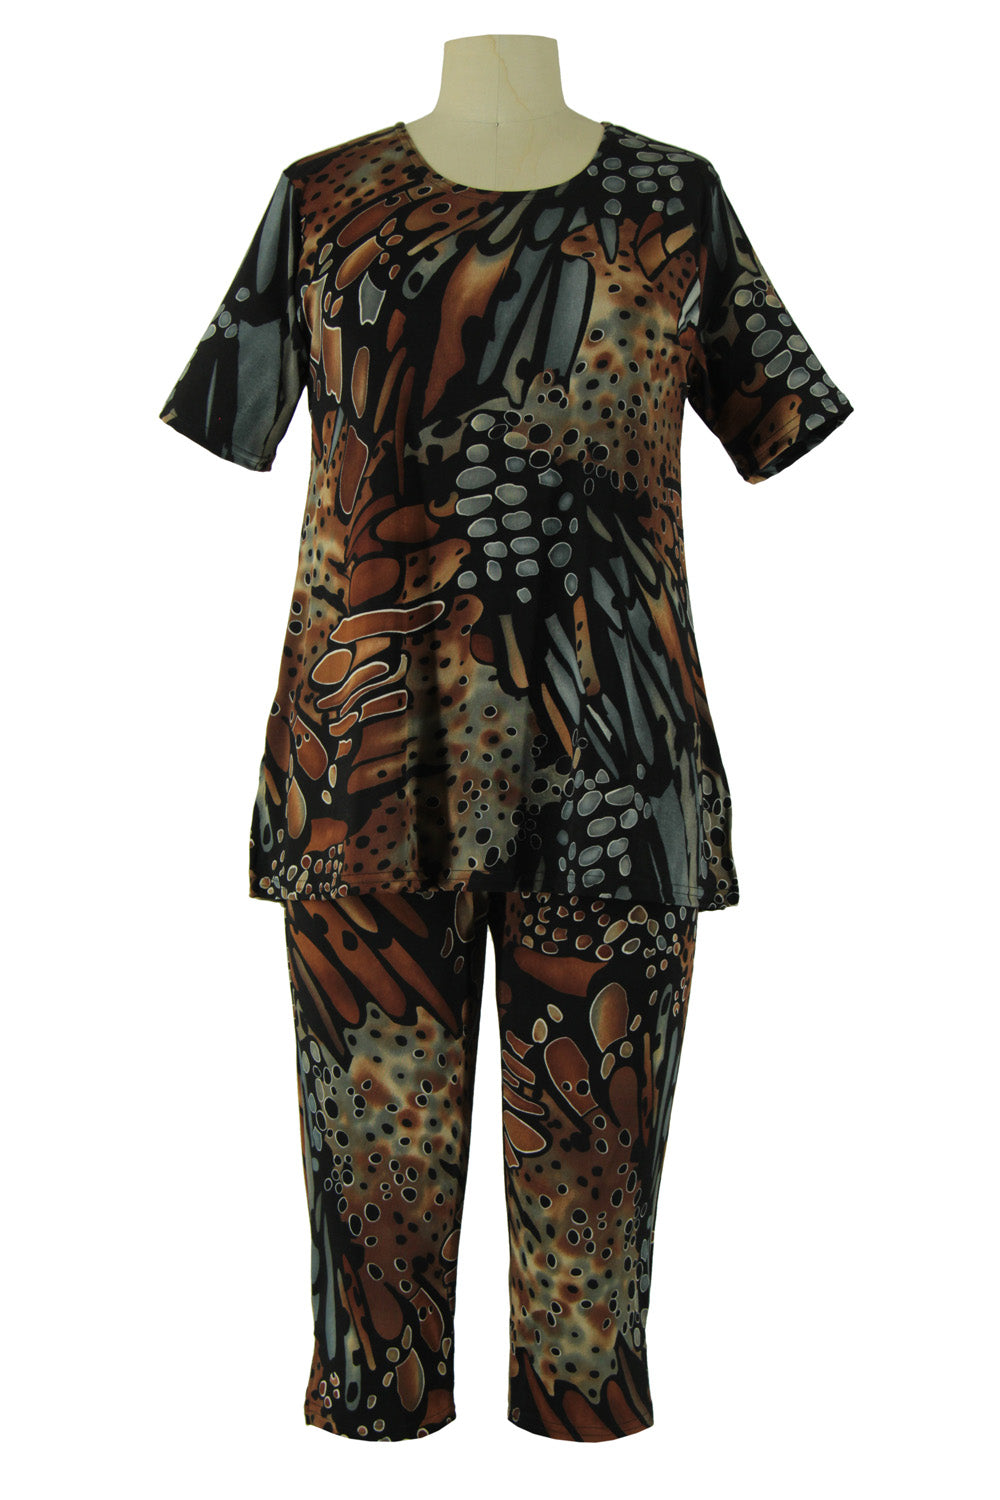 Jostar Women's Stretchy Capri Pant Set Short Sleeve Print, 903BN-SP-W207 - Jostar Online